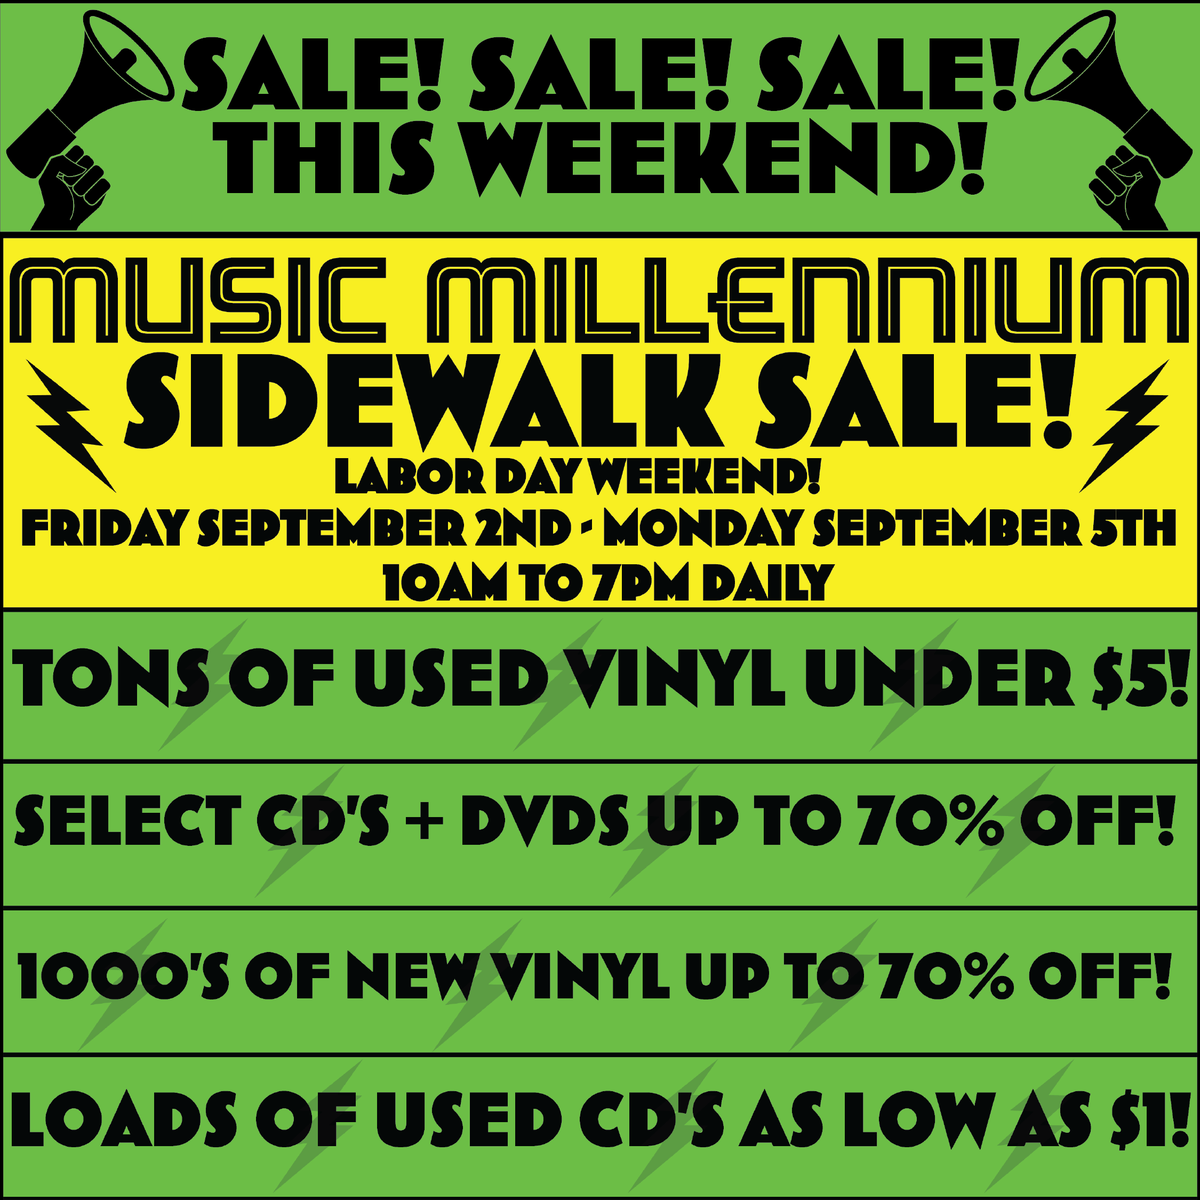 Have you heard?? We're having a sidewalk sale!